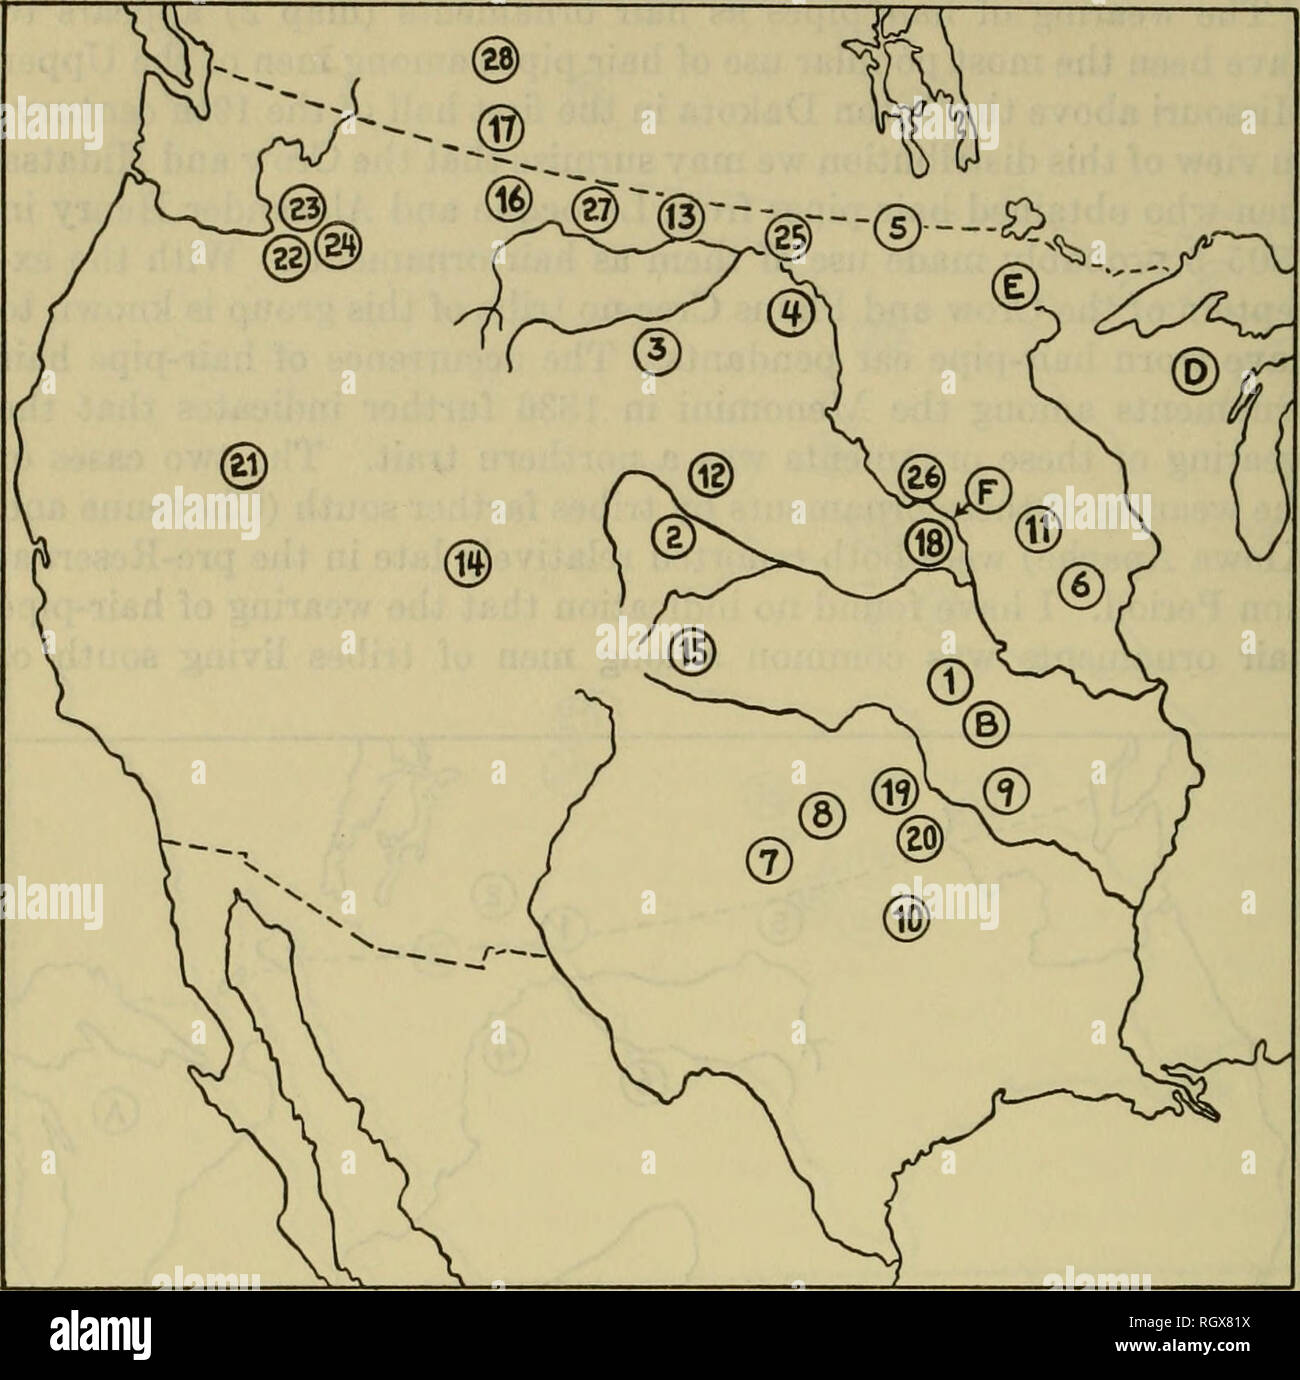 . Bulletin. Ethnology. 78 BUREAU OF AMERICAN ETHNOLOGY [Bull. 164. Map 3.—Distribution of hair-pipe necklaces. Western tribes: 1, Kansa (1831); 2, Cheyenne (1832); 3, Crow (1832); 4, Mandan (1832); 5, Plains Ojlbwa (1832); 6, Sauk and Fox (1832); 7, Comanche (1834); 8, Kiowa (1834); 9, Osage (1834); 10, Wichita (1834); 11, Iowa (1845-6); 12, Oglala (1868); 13, Assiniboin (before 1885); 14, Ute (1884); 15, Arapaho (before 1890); 16, Piegan (ca. 1892); 17, Blood (ca. 1892); 18, Omaha (1898); 19, Ponca (before 1900);20, Pawnee (ISOO); 21, Paiute (ca. 1900); 22, Umatilla (ca. 1900); 23, Walla Wall Stock Photo